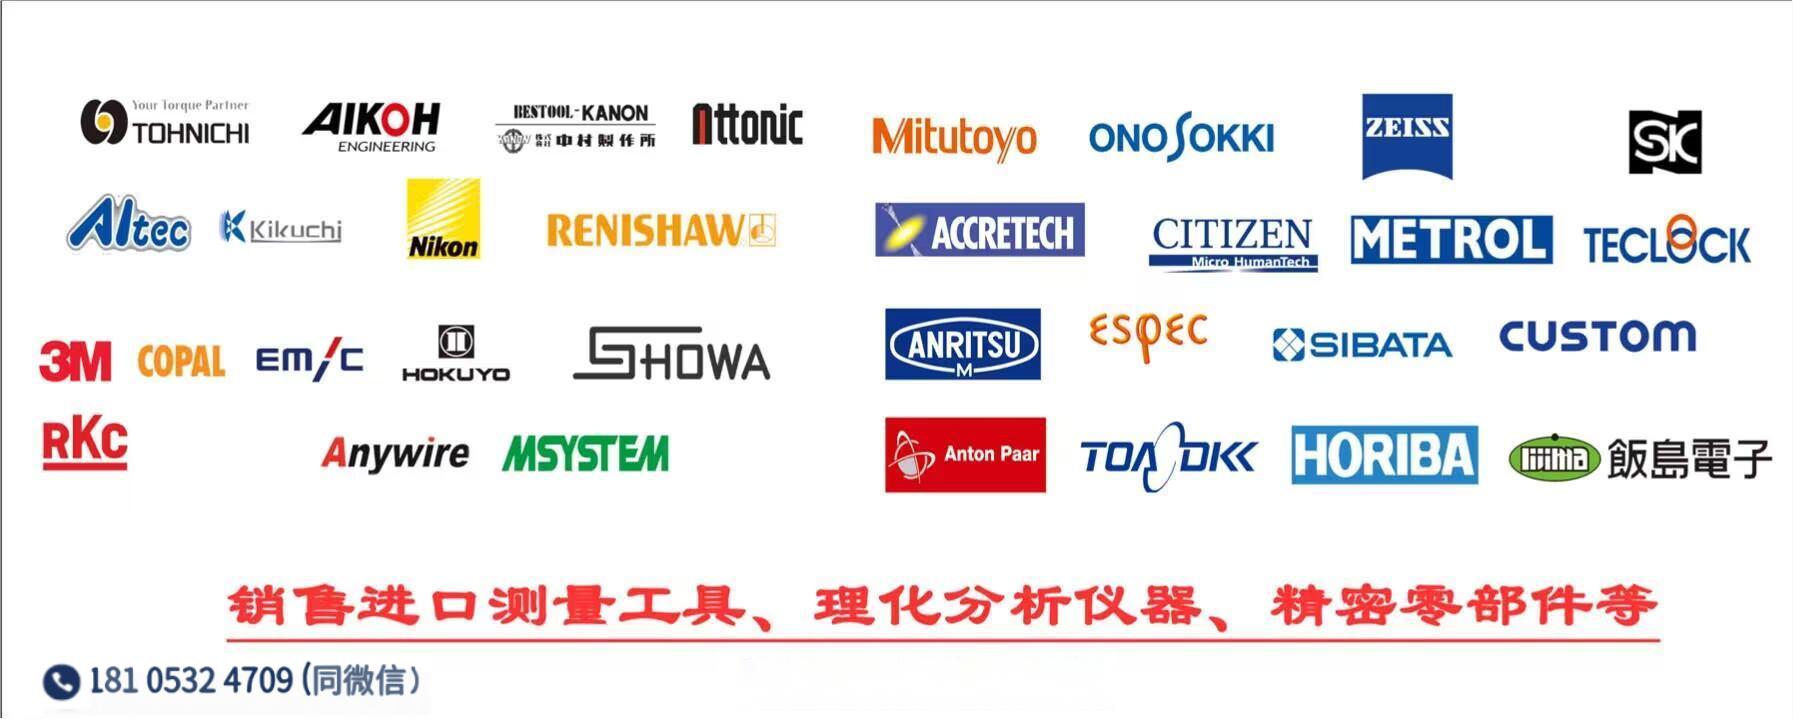 优势供应日本原装进口 厂家名称 イノアックINOAC車輪 产品型号 GR-100W  / GR-100WJ  / GR-100WJS